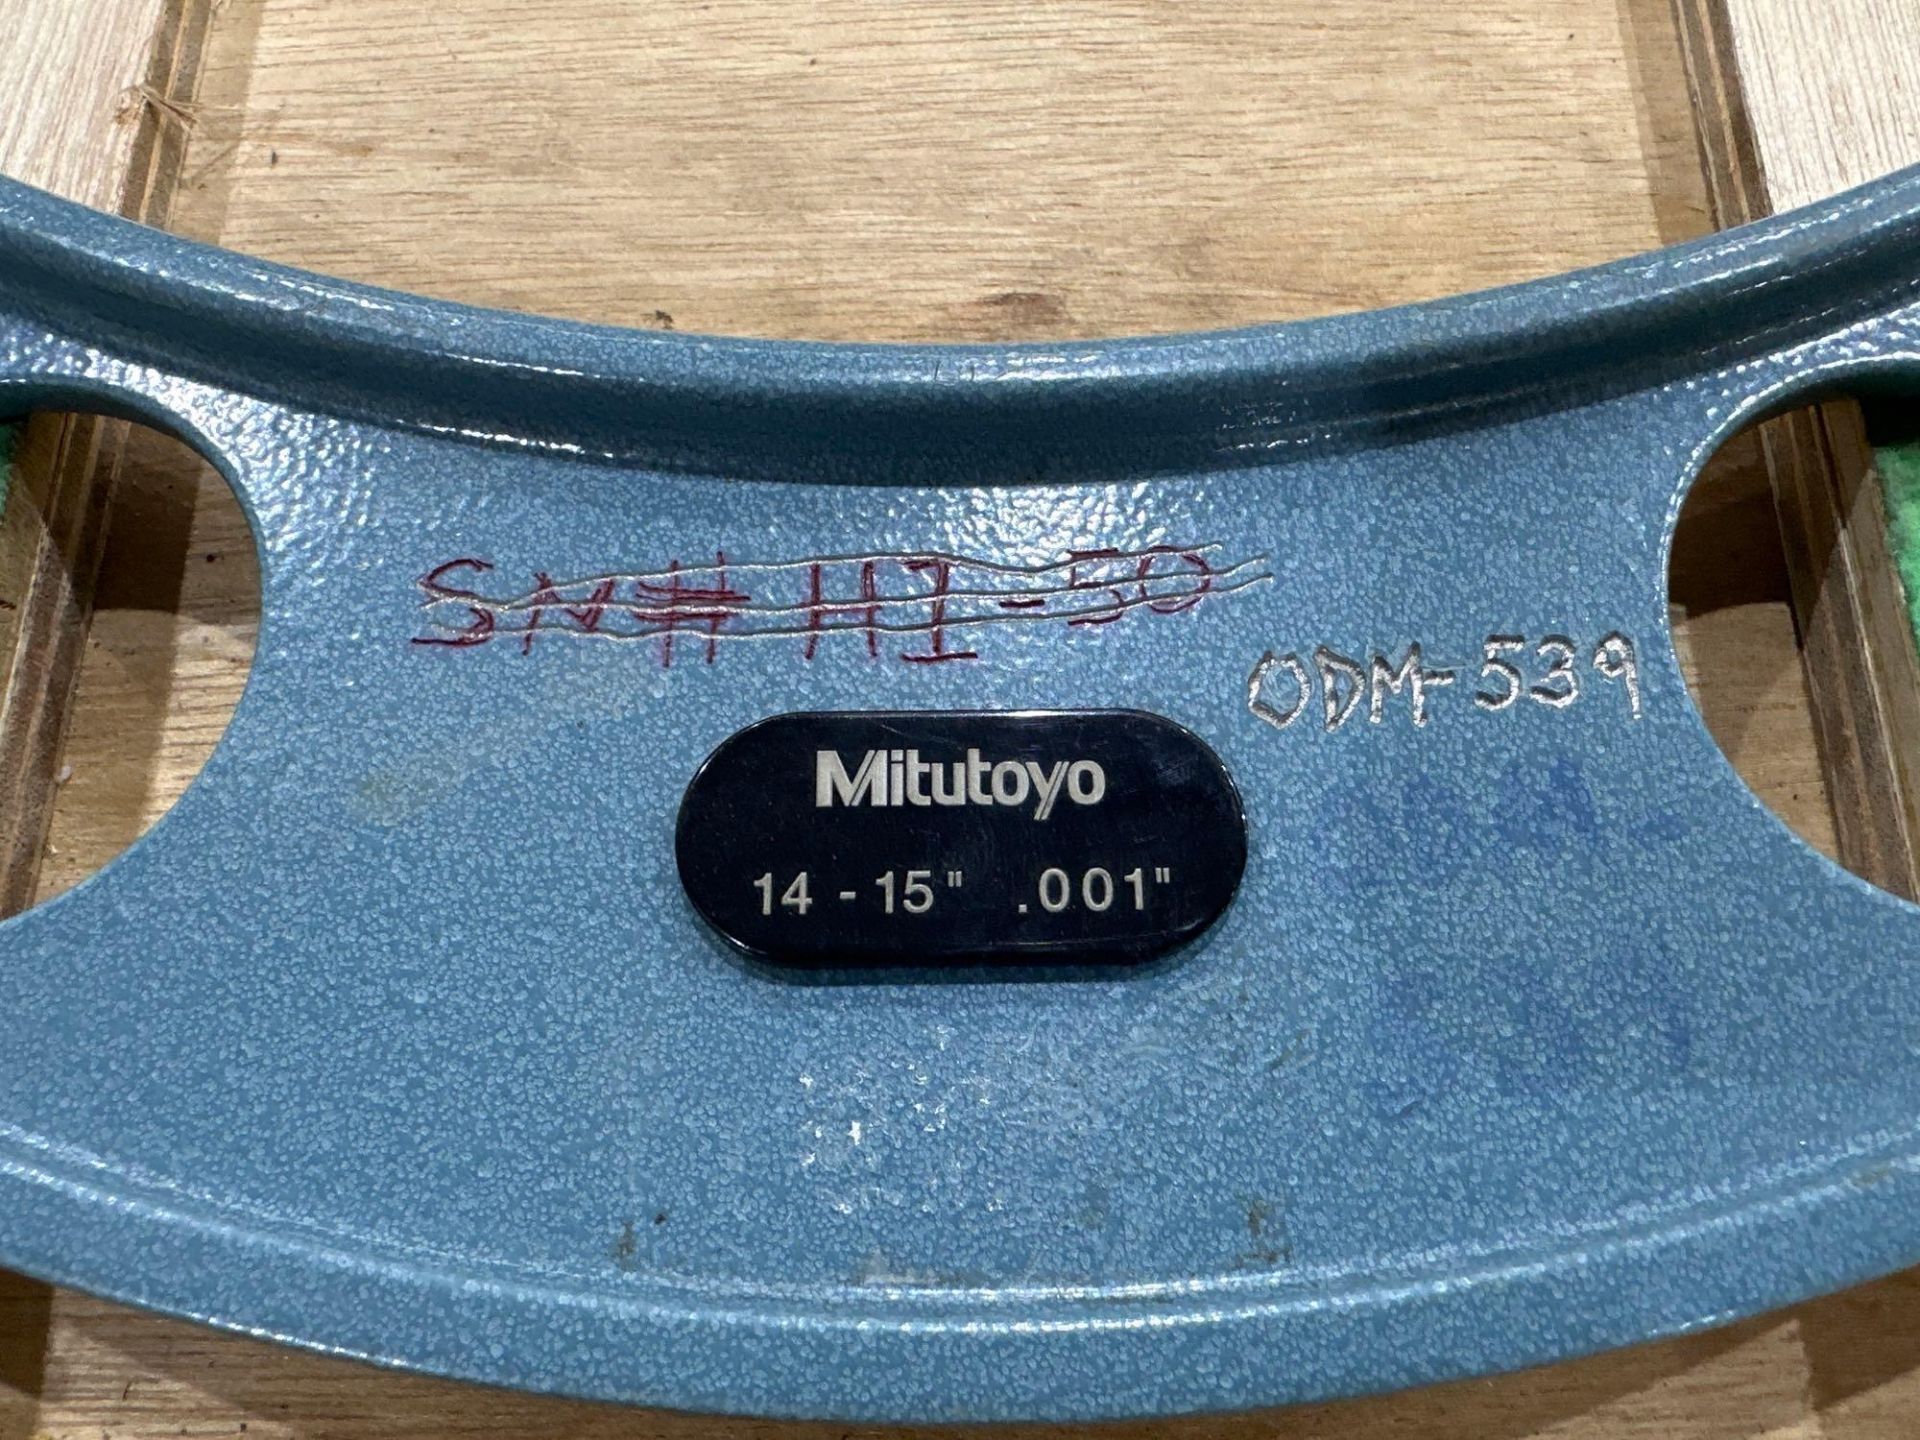 Mitutoyo Mechanical OD Micrometer No. 103-191, 14–15” Range, .001” Graduation, in wood case - Image 6 of 7